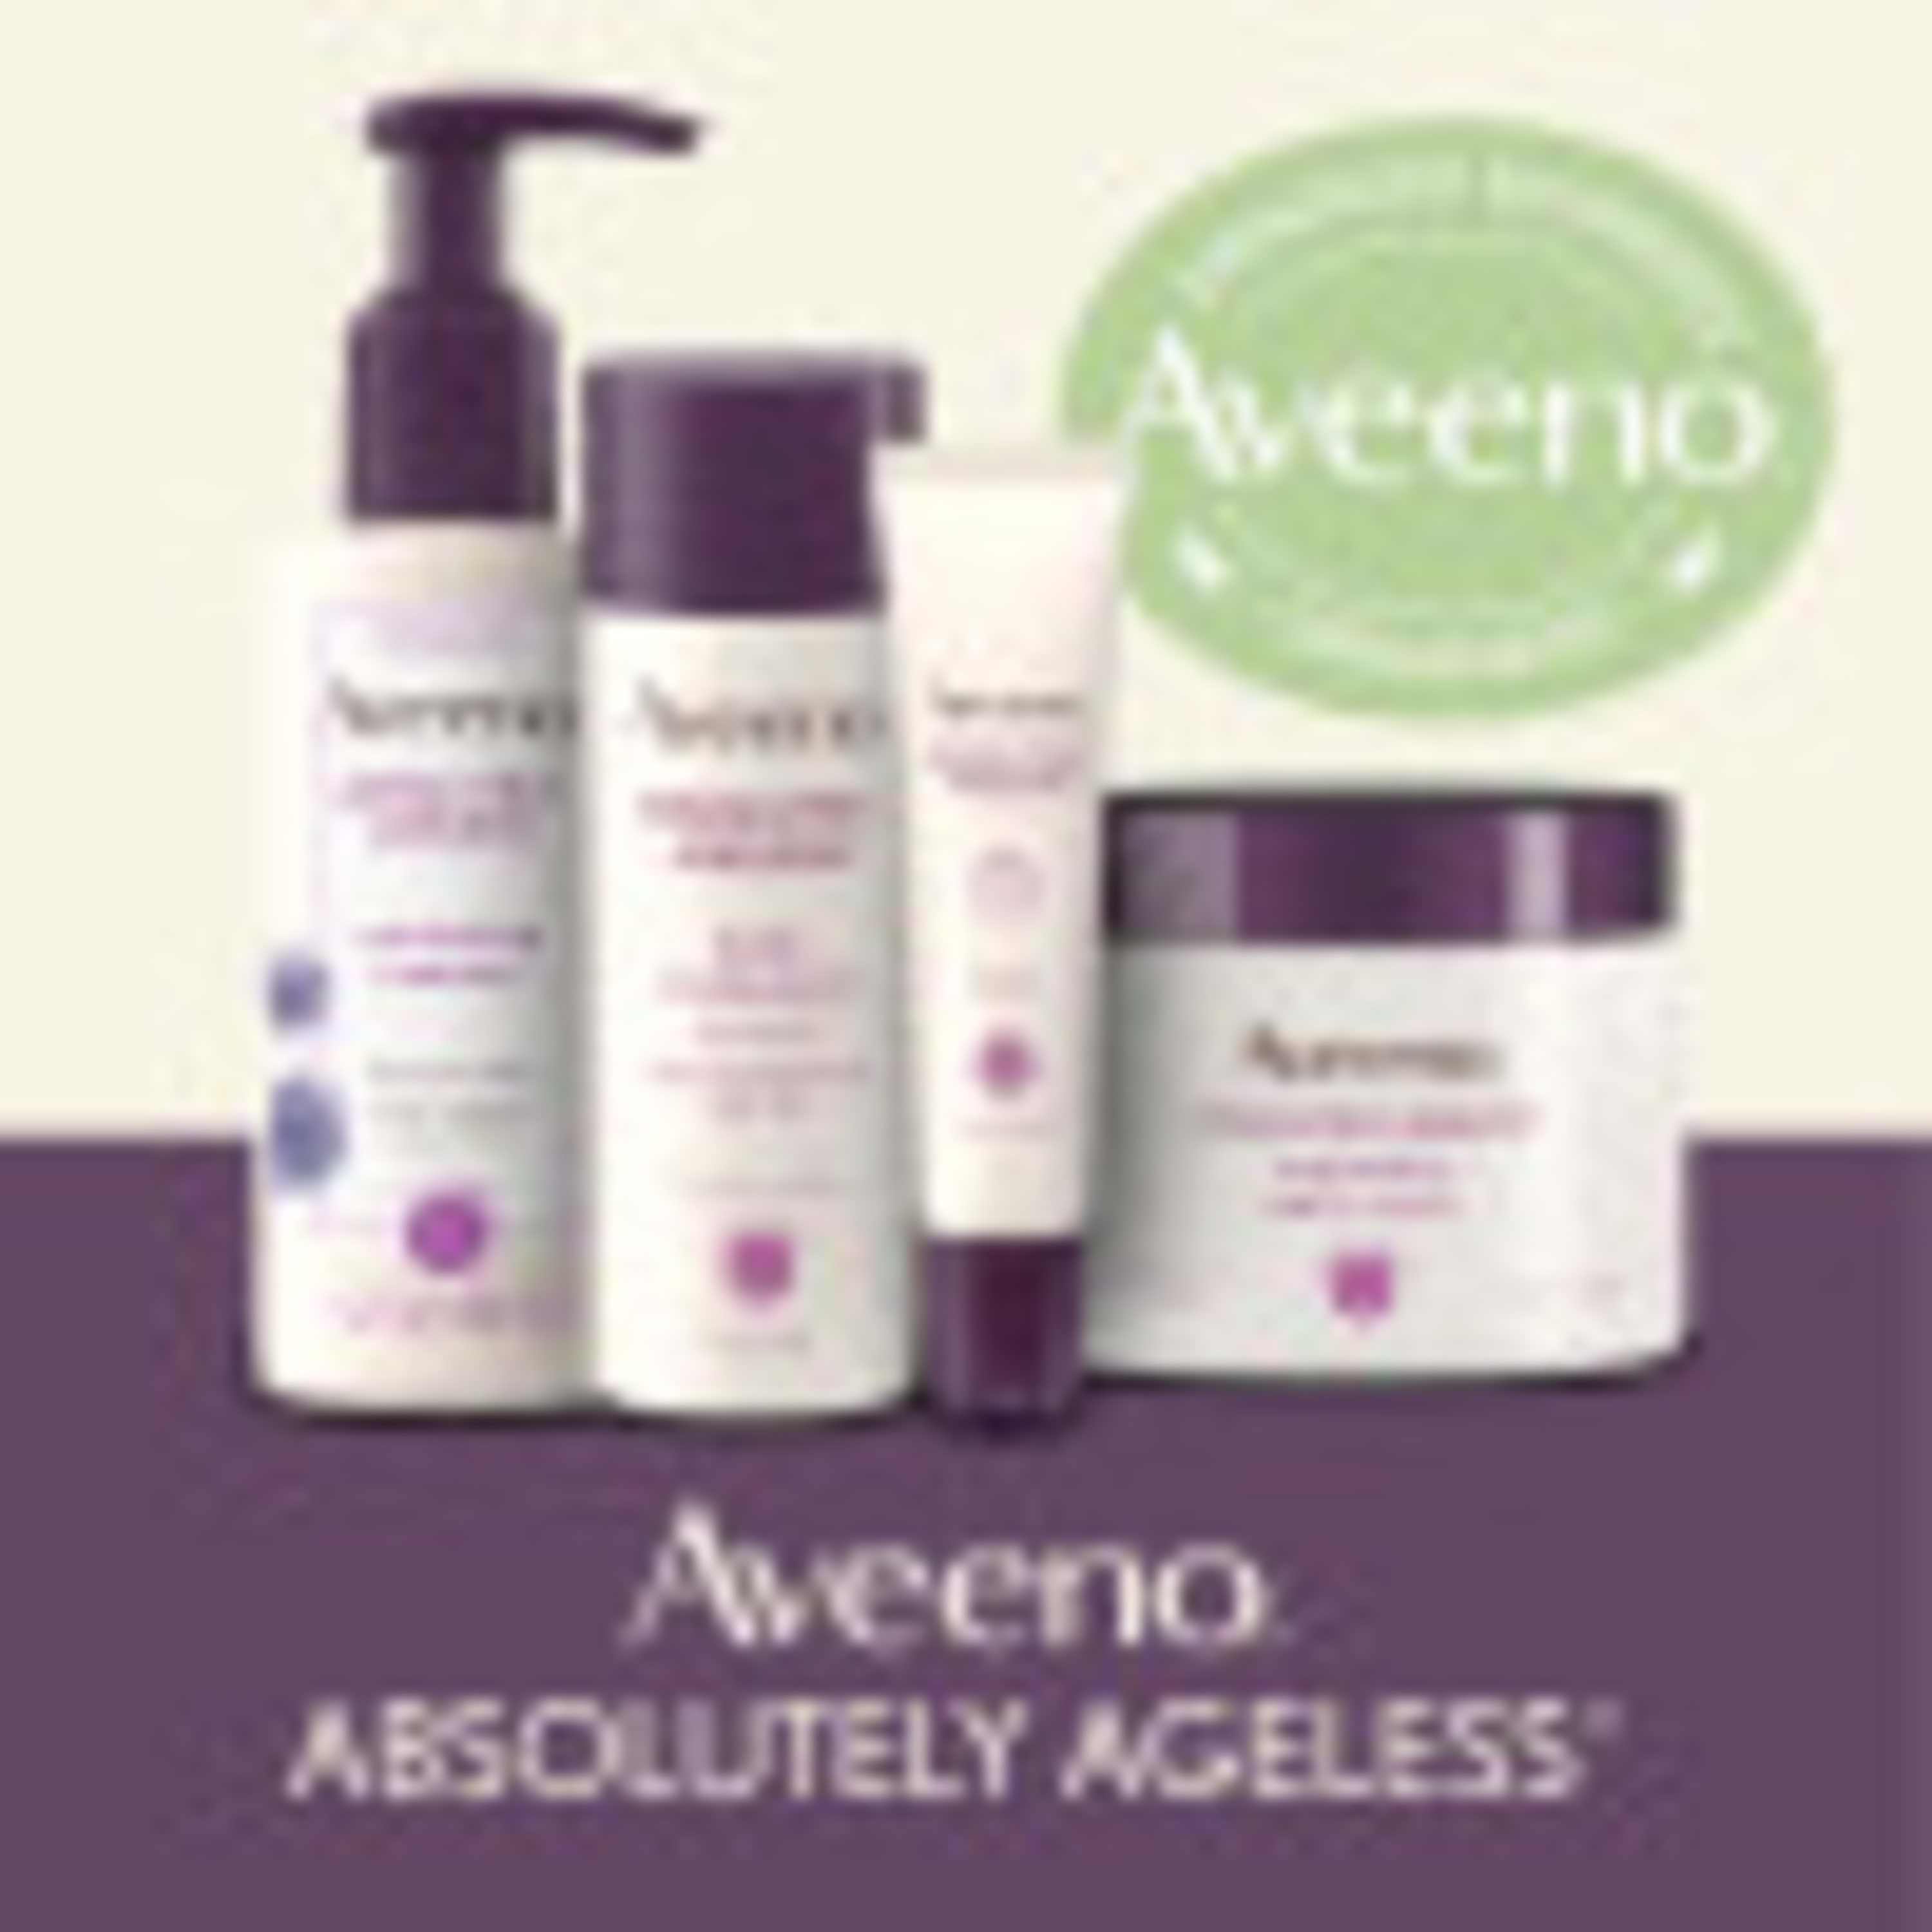 Aveeno Absolutely Ageless Anti-Wrinkle Moisturizer, SPF 30, 1.7 fl. oz - image 16 of 29